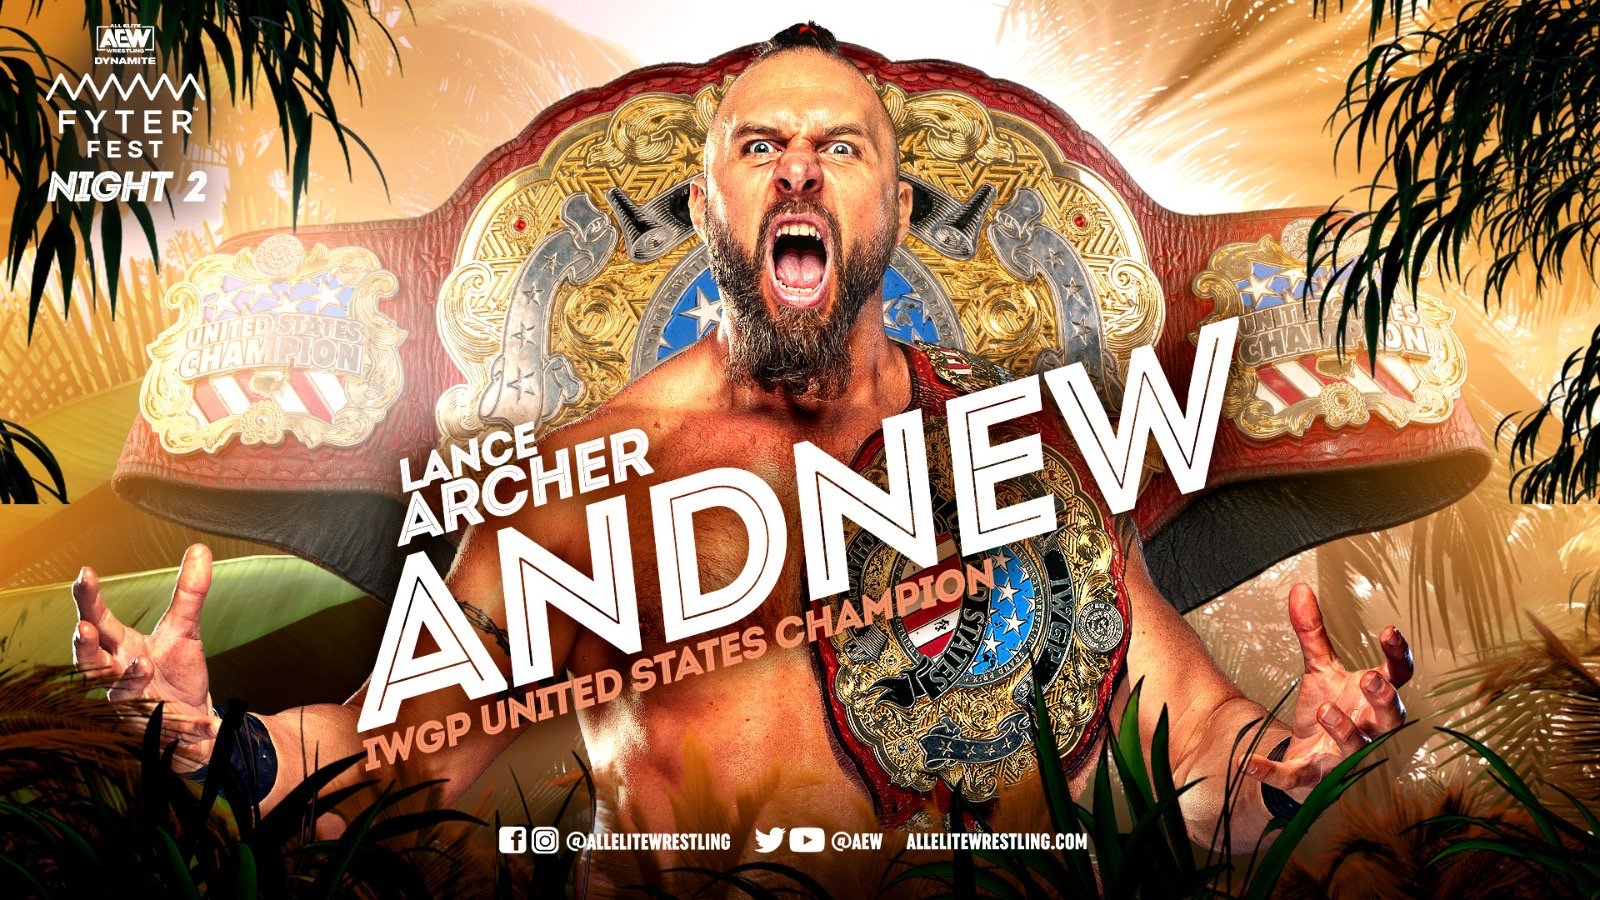 Lance Archer Wins IWGP United States Championship